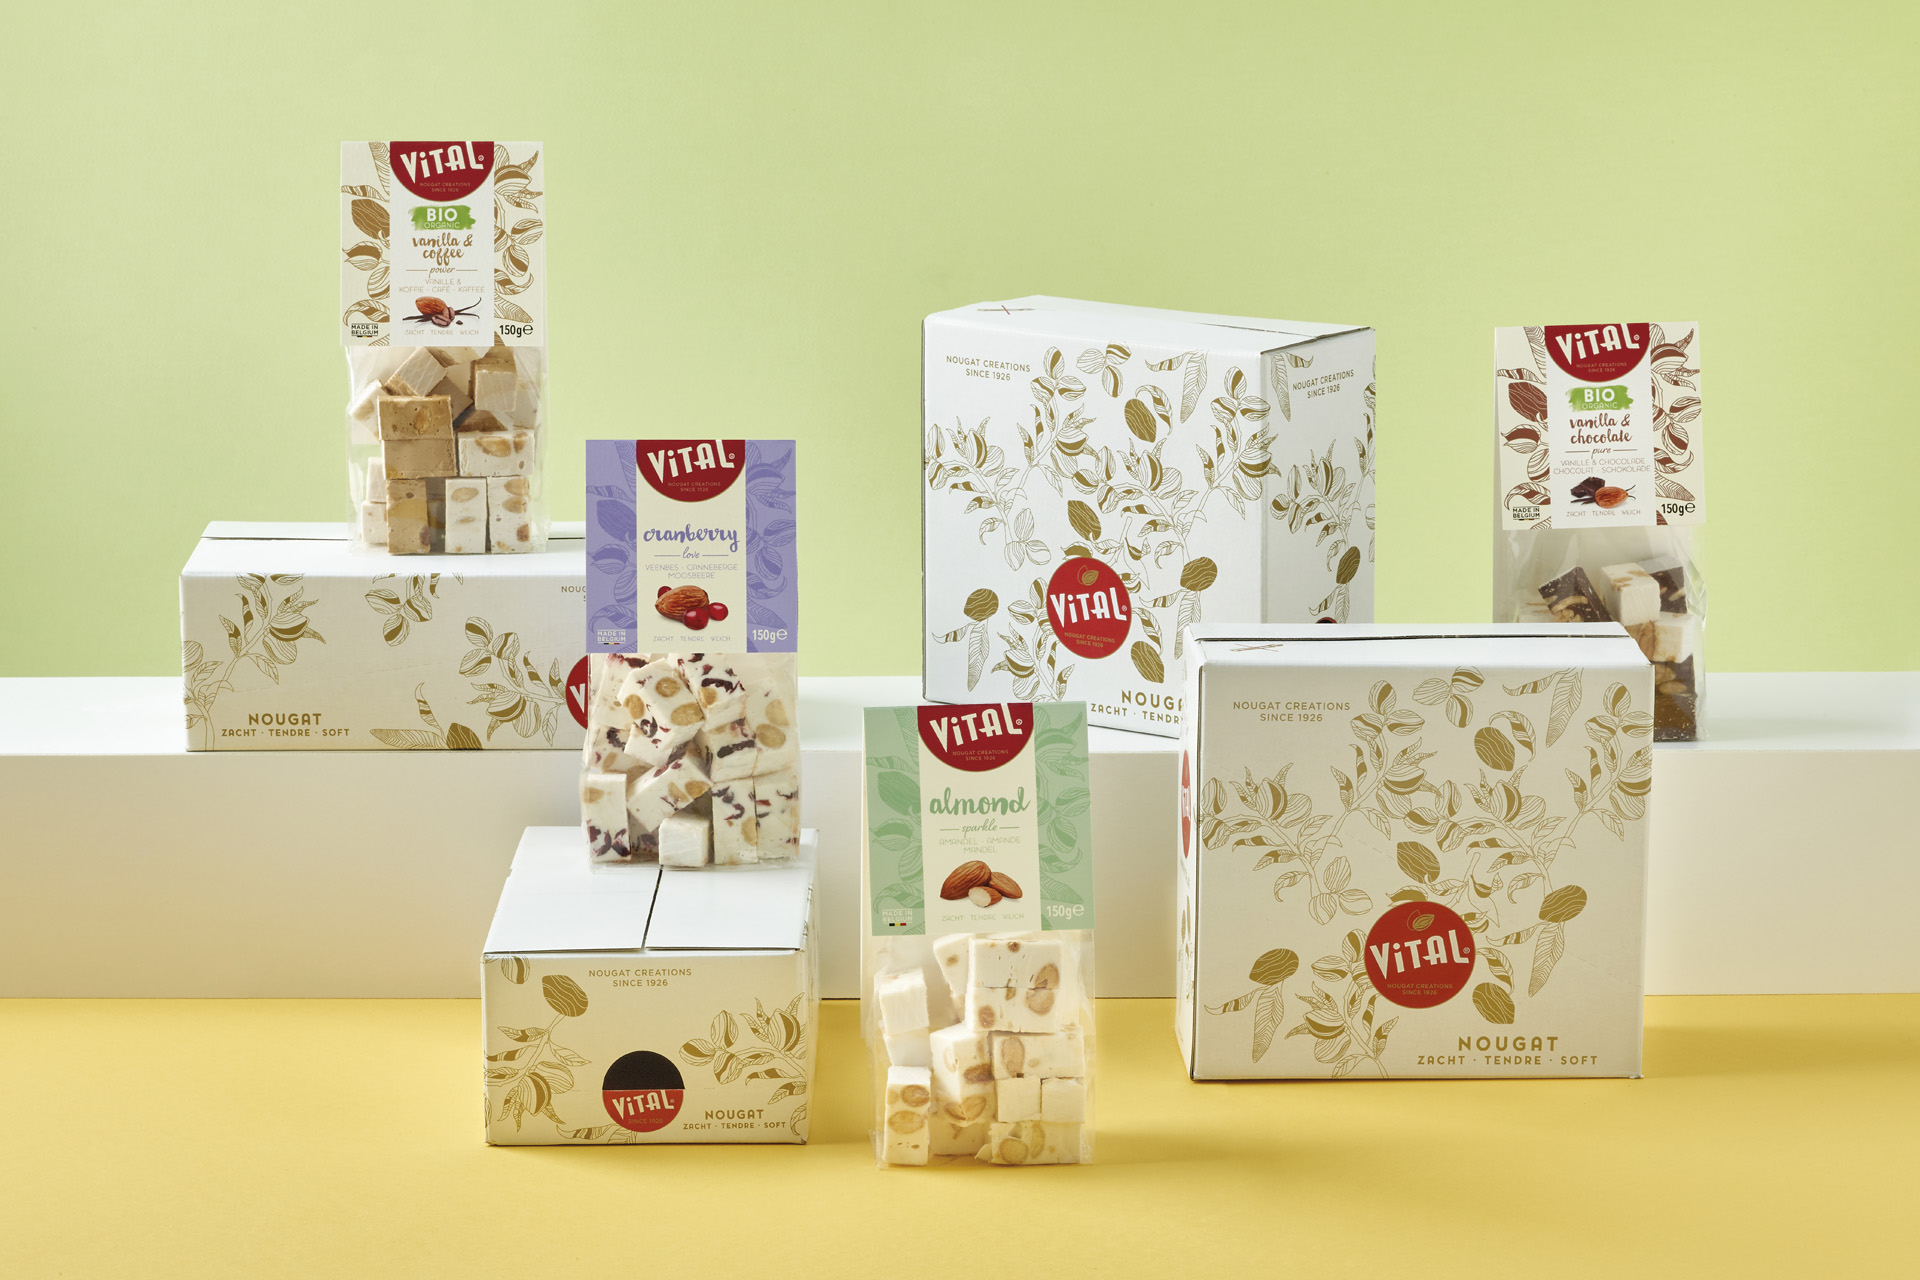 Vital nougat brand repositioning / packaging design by DesignRepublic, branding & packaging design Belgium